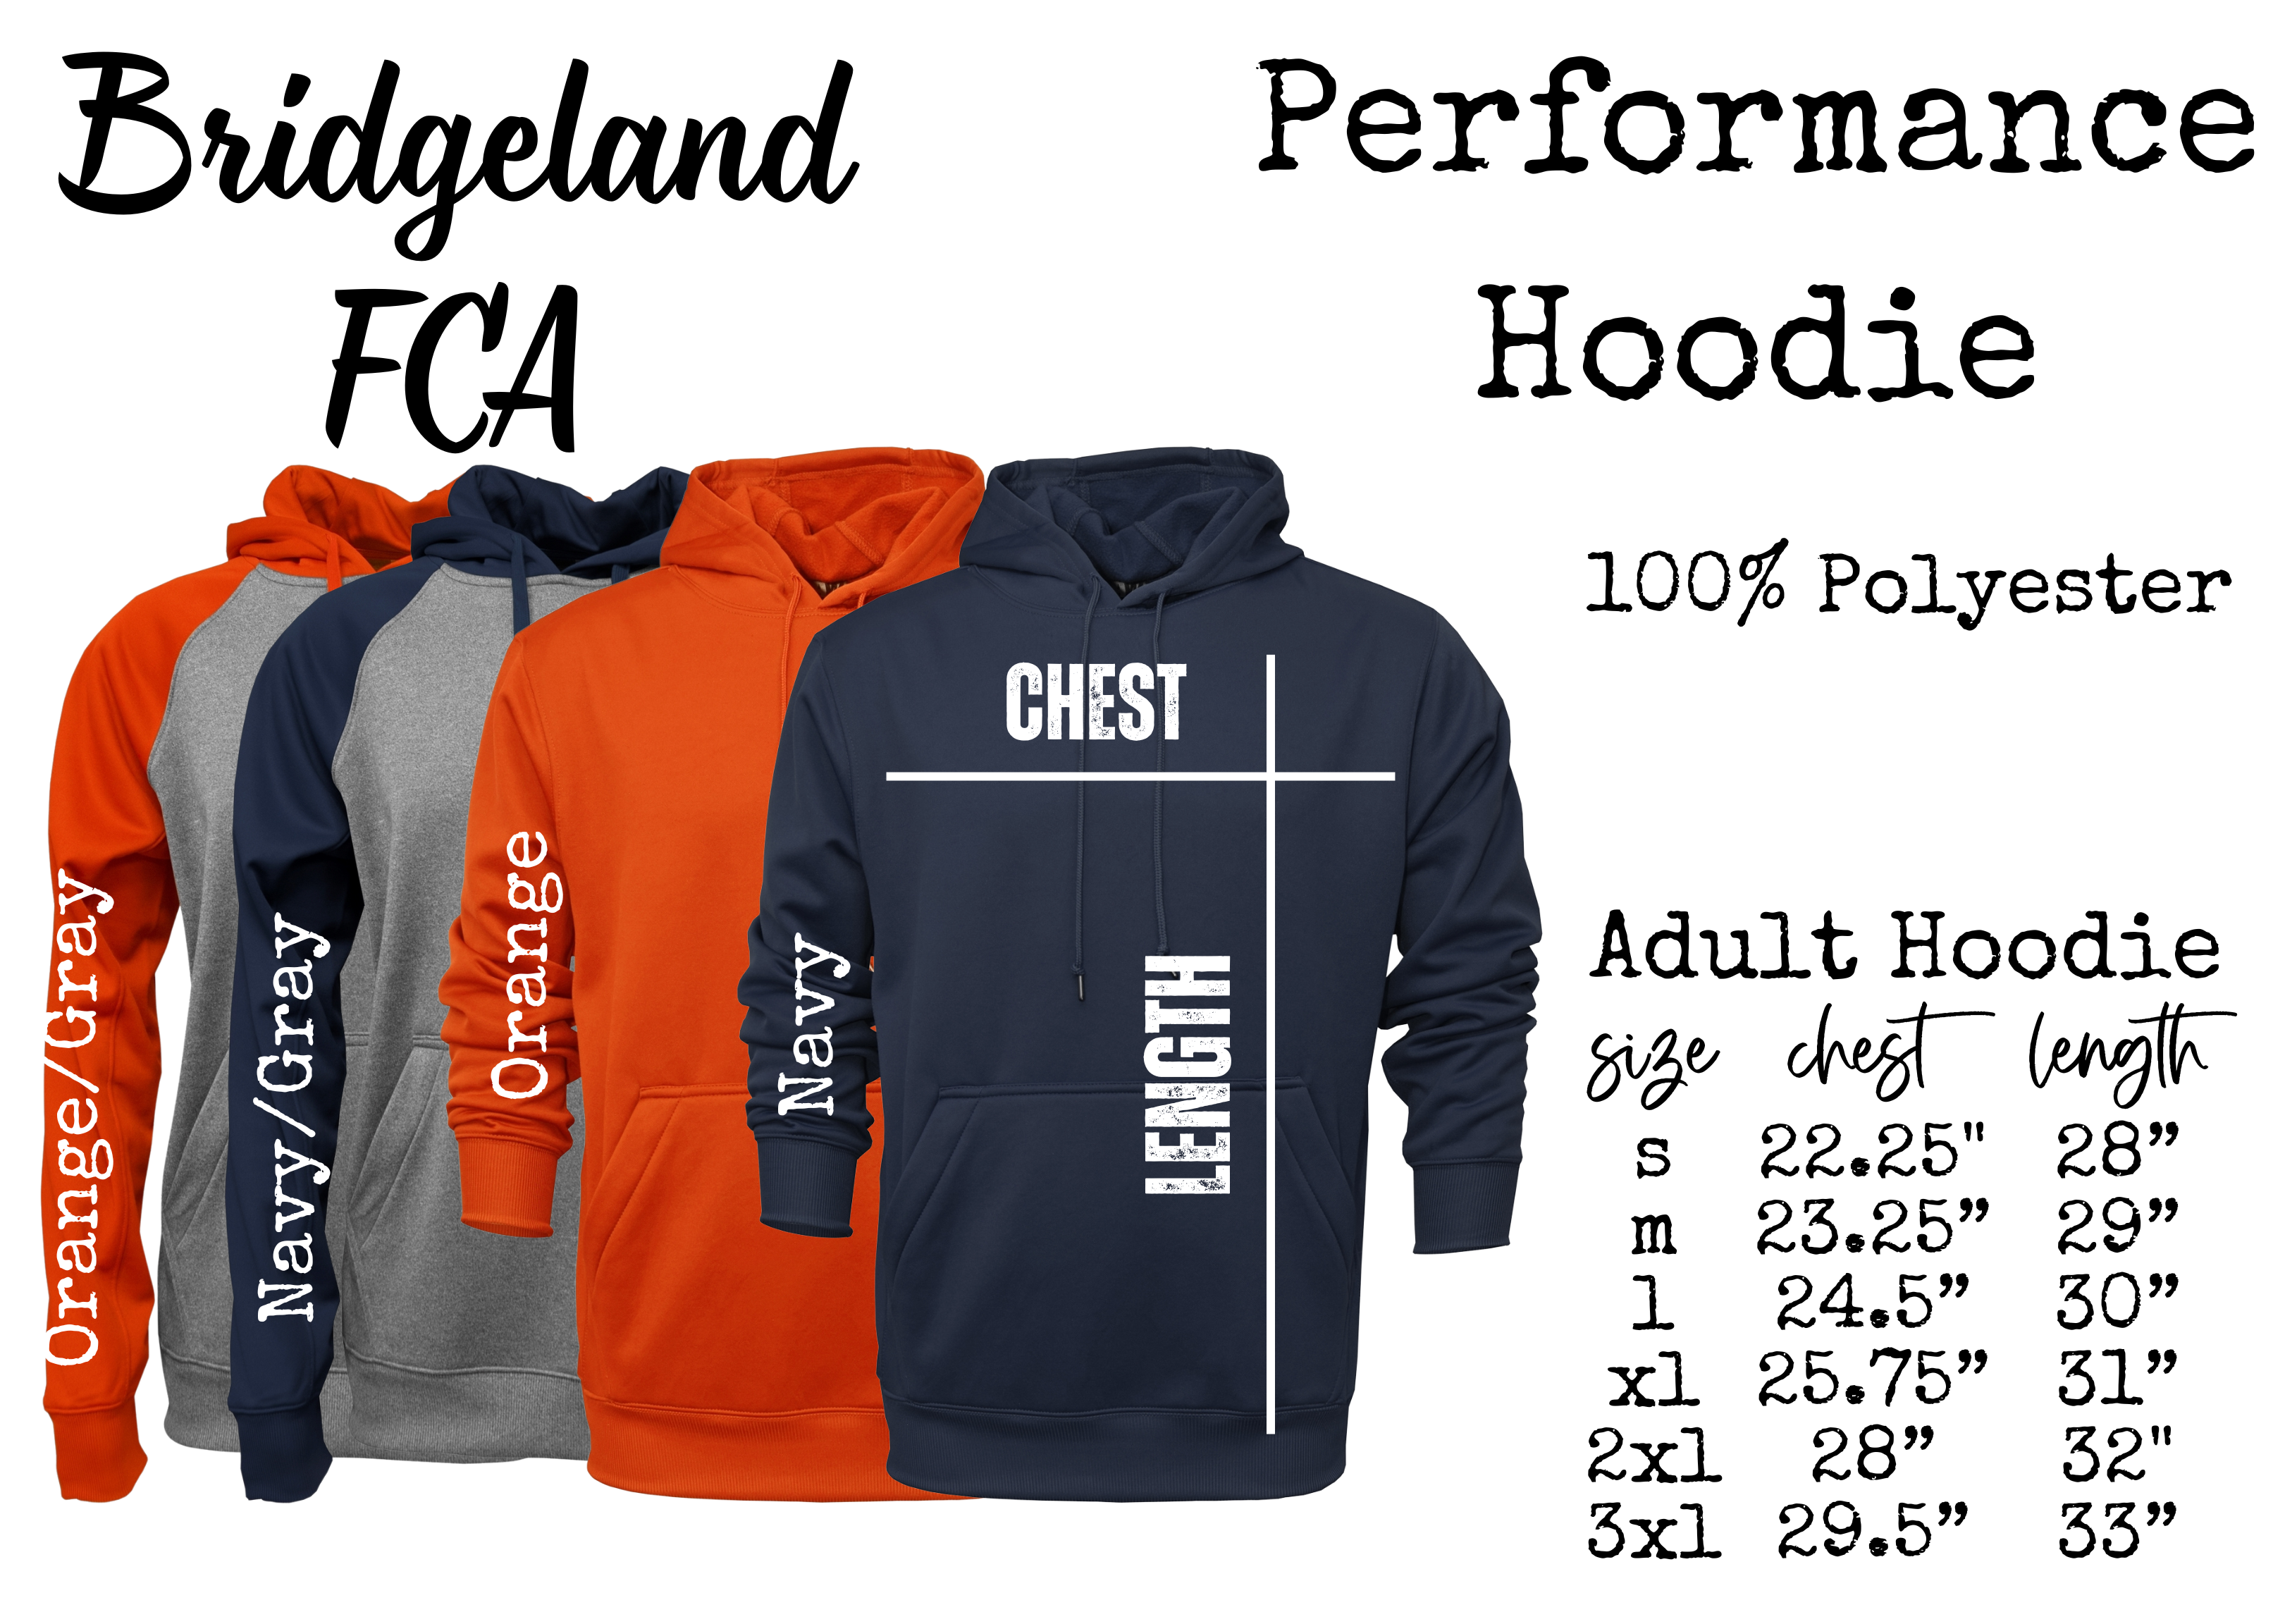 FCA Rise Performance Hooded Sweatshirt